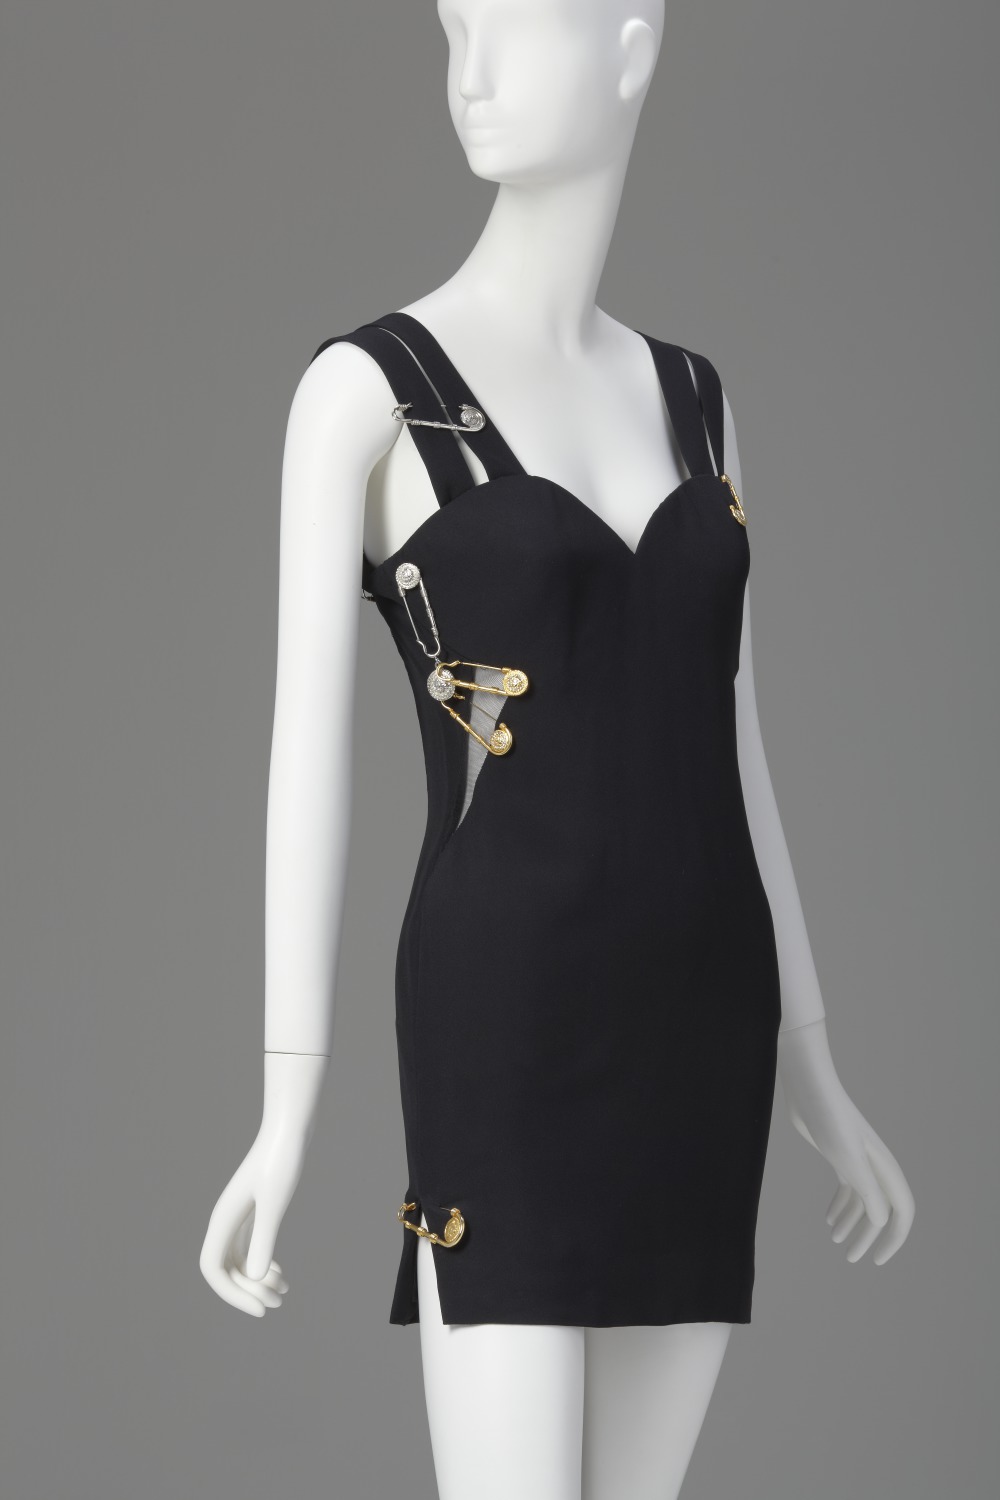 Gianni Versace, Dress (Vestido), 1994. Rayon, acetate, silk, metal and rhinestones. Gift of Mrs. Kelly Ellman.